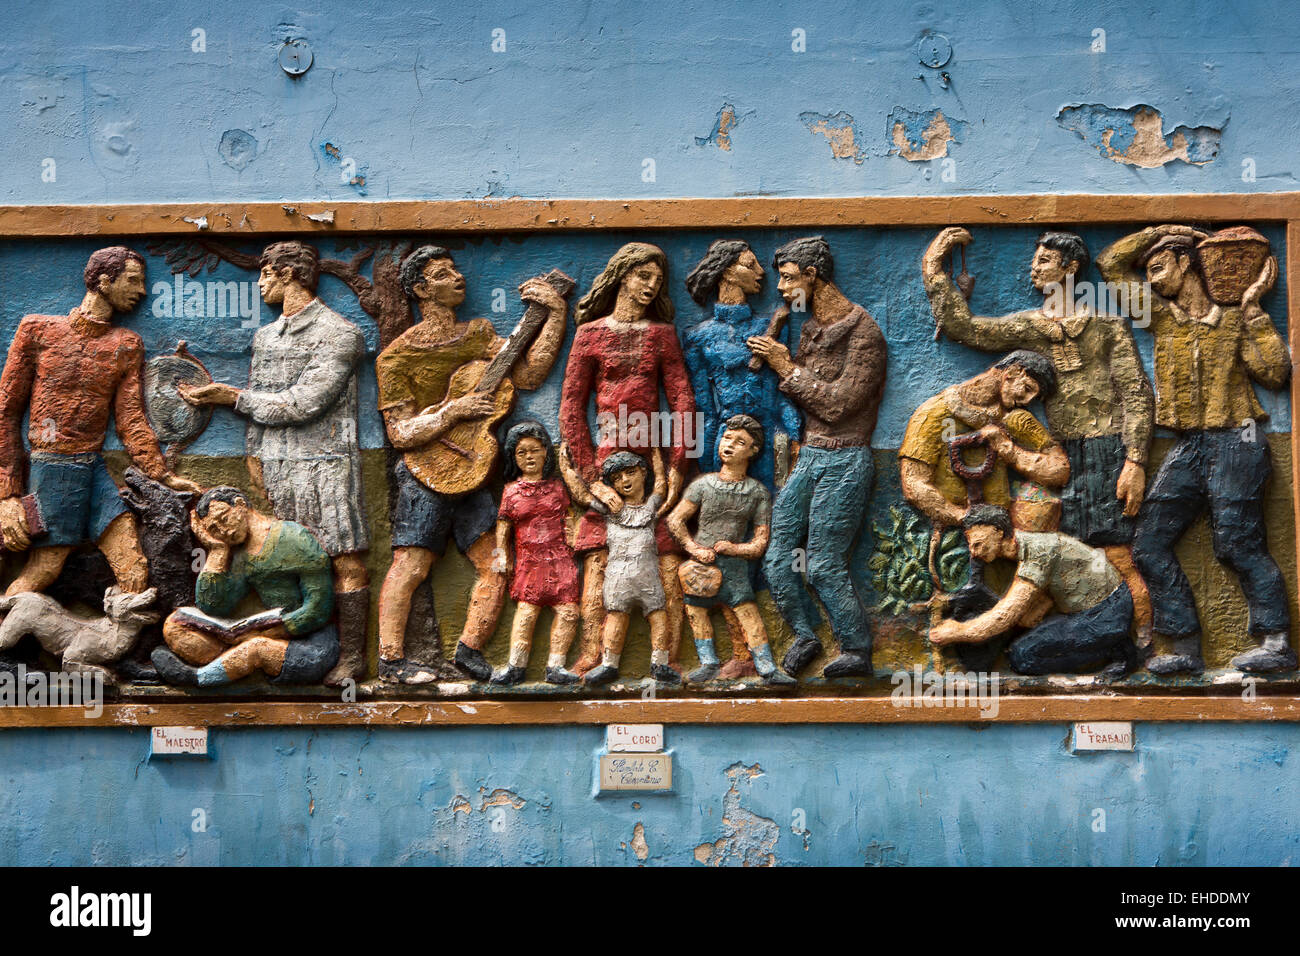 L'ARGENTINE, Buenos Aires, La Boca, Caminito, El Coro, le choeur, relief mural Banque D'Images